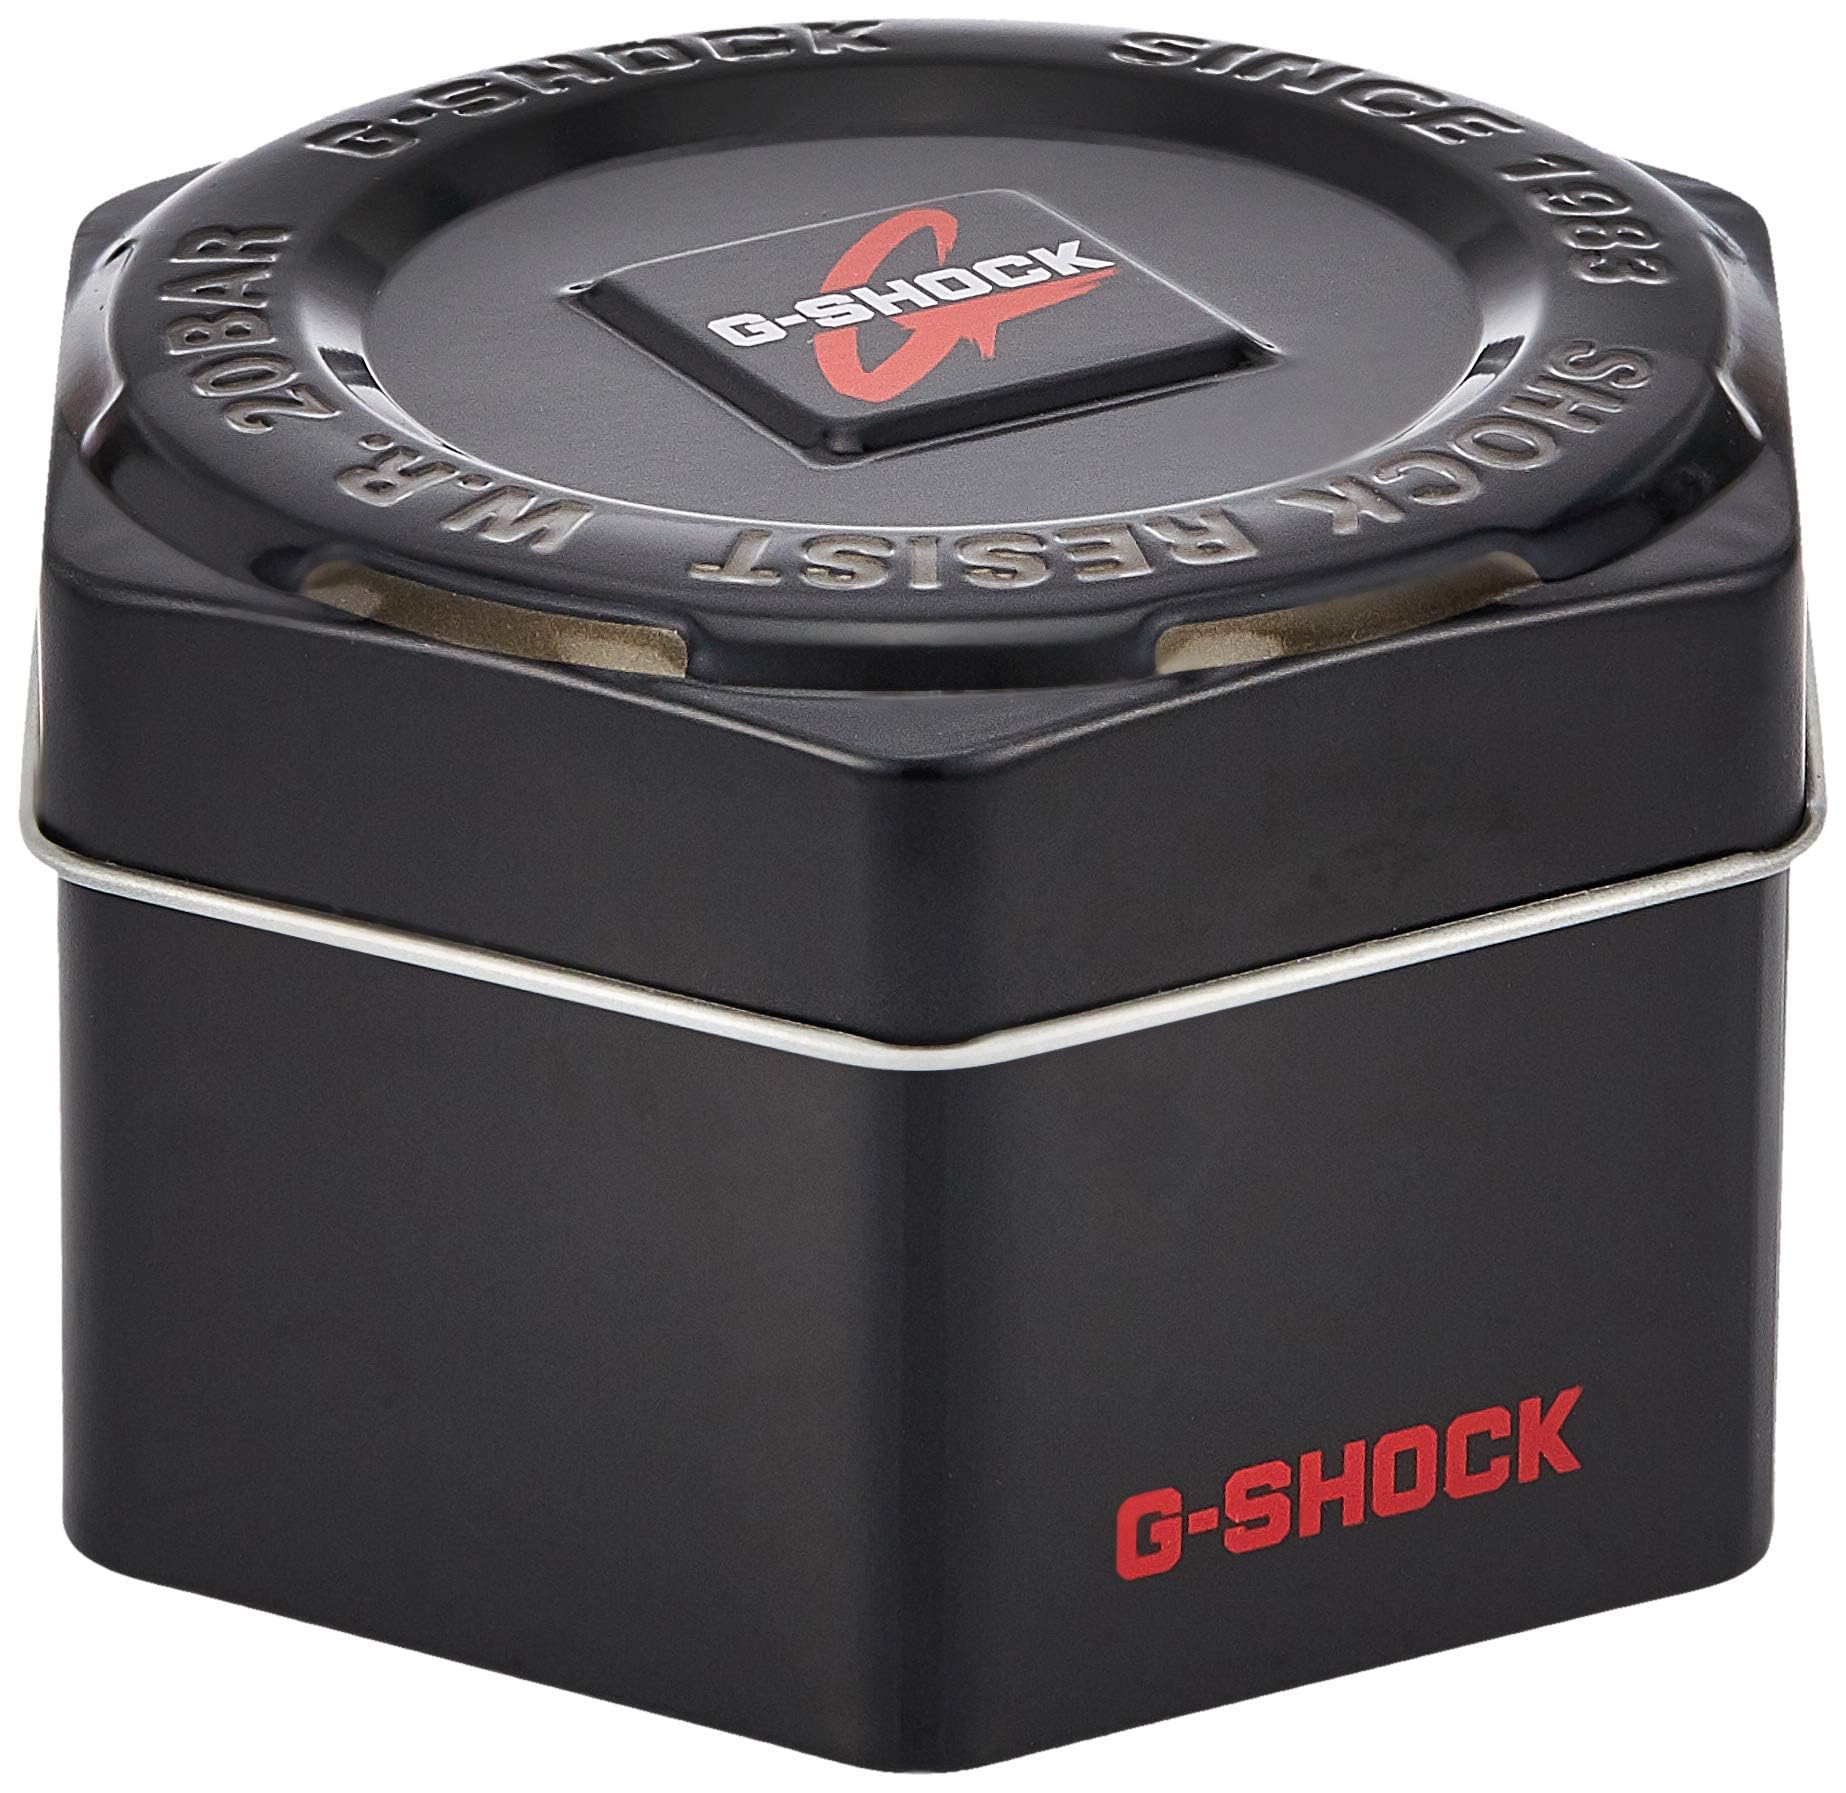 Casio G-Shock Mudmaster Twin Sensor Mens' Sports Watch (Black)